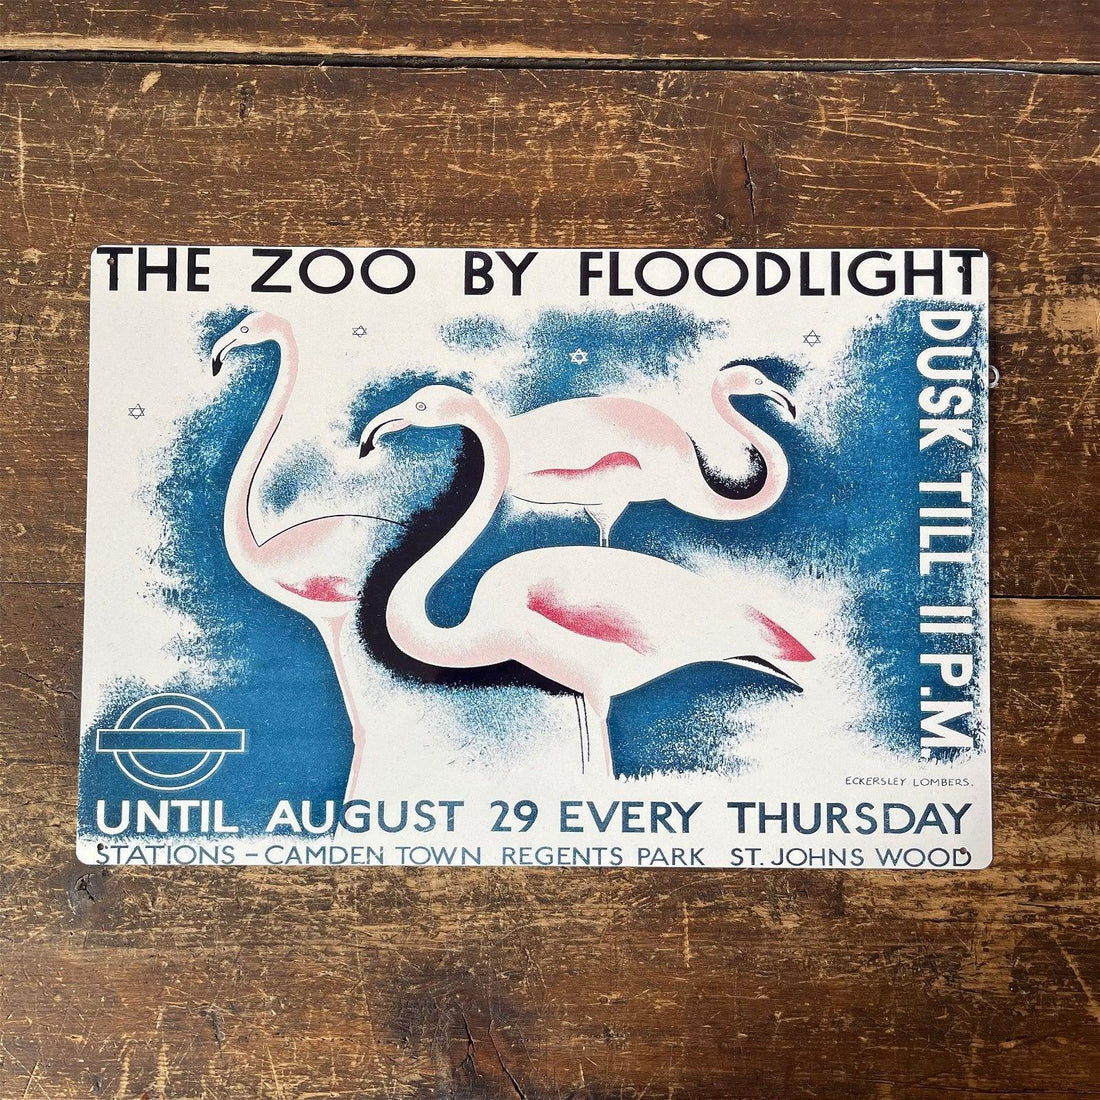 Vintage Metal Sign - London Underground, Visit The Zoo - £27.99 - Retro Advertising 